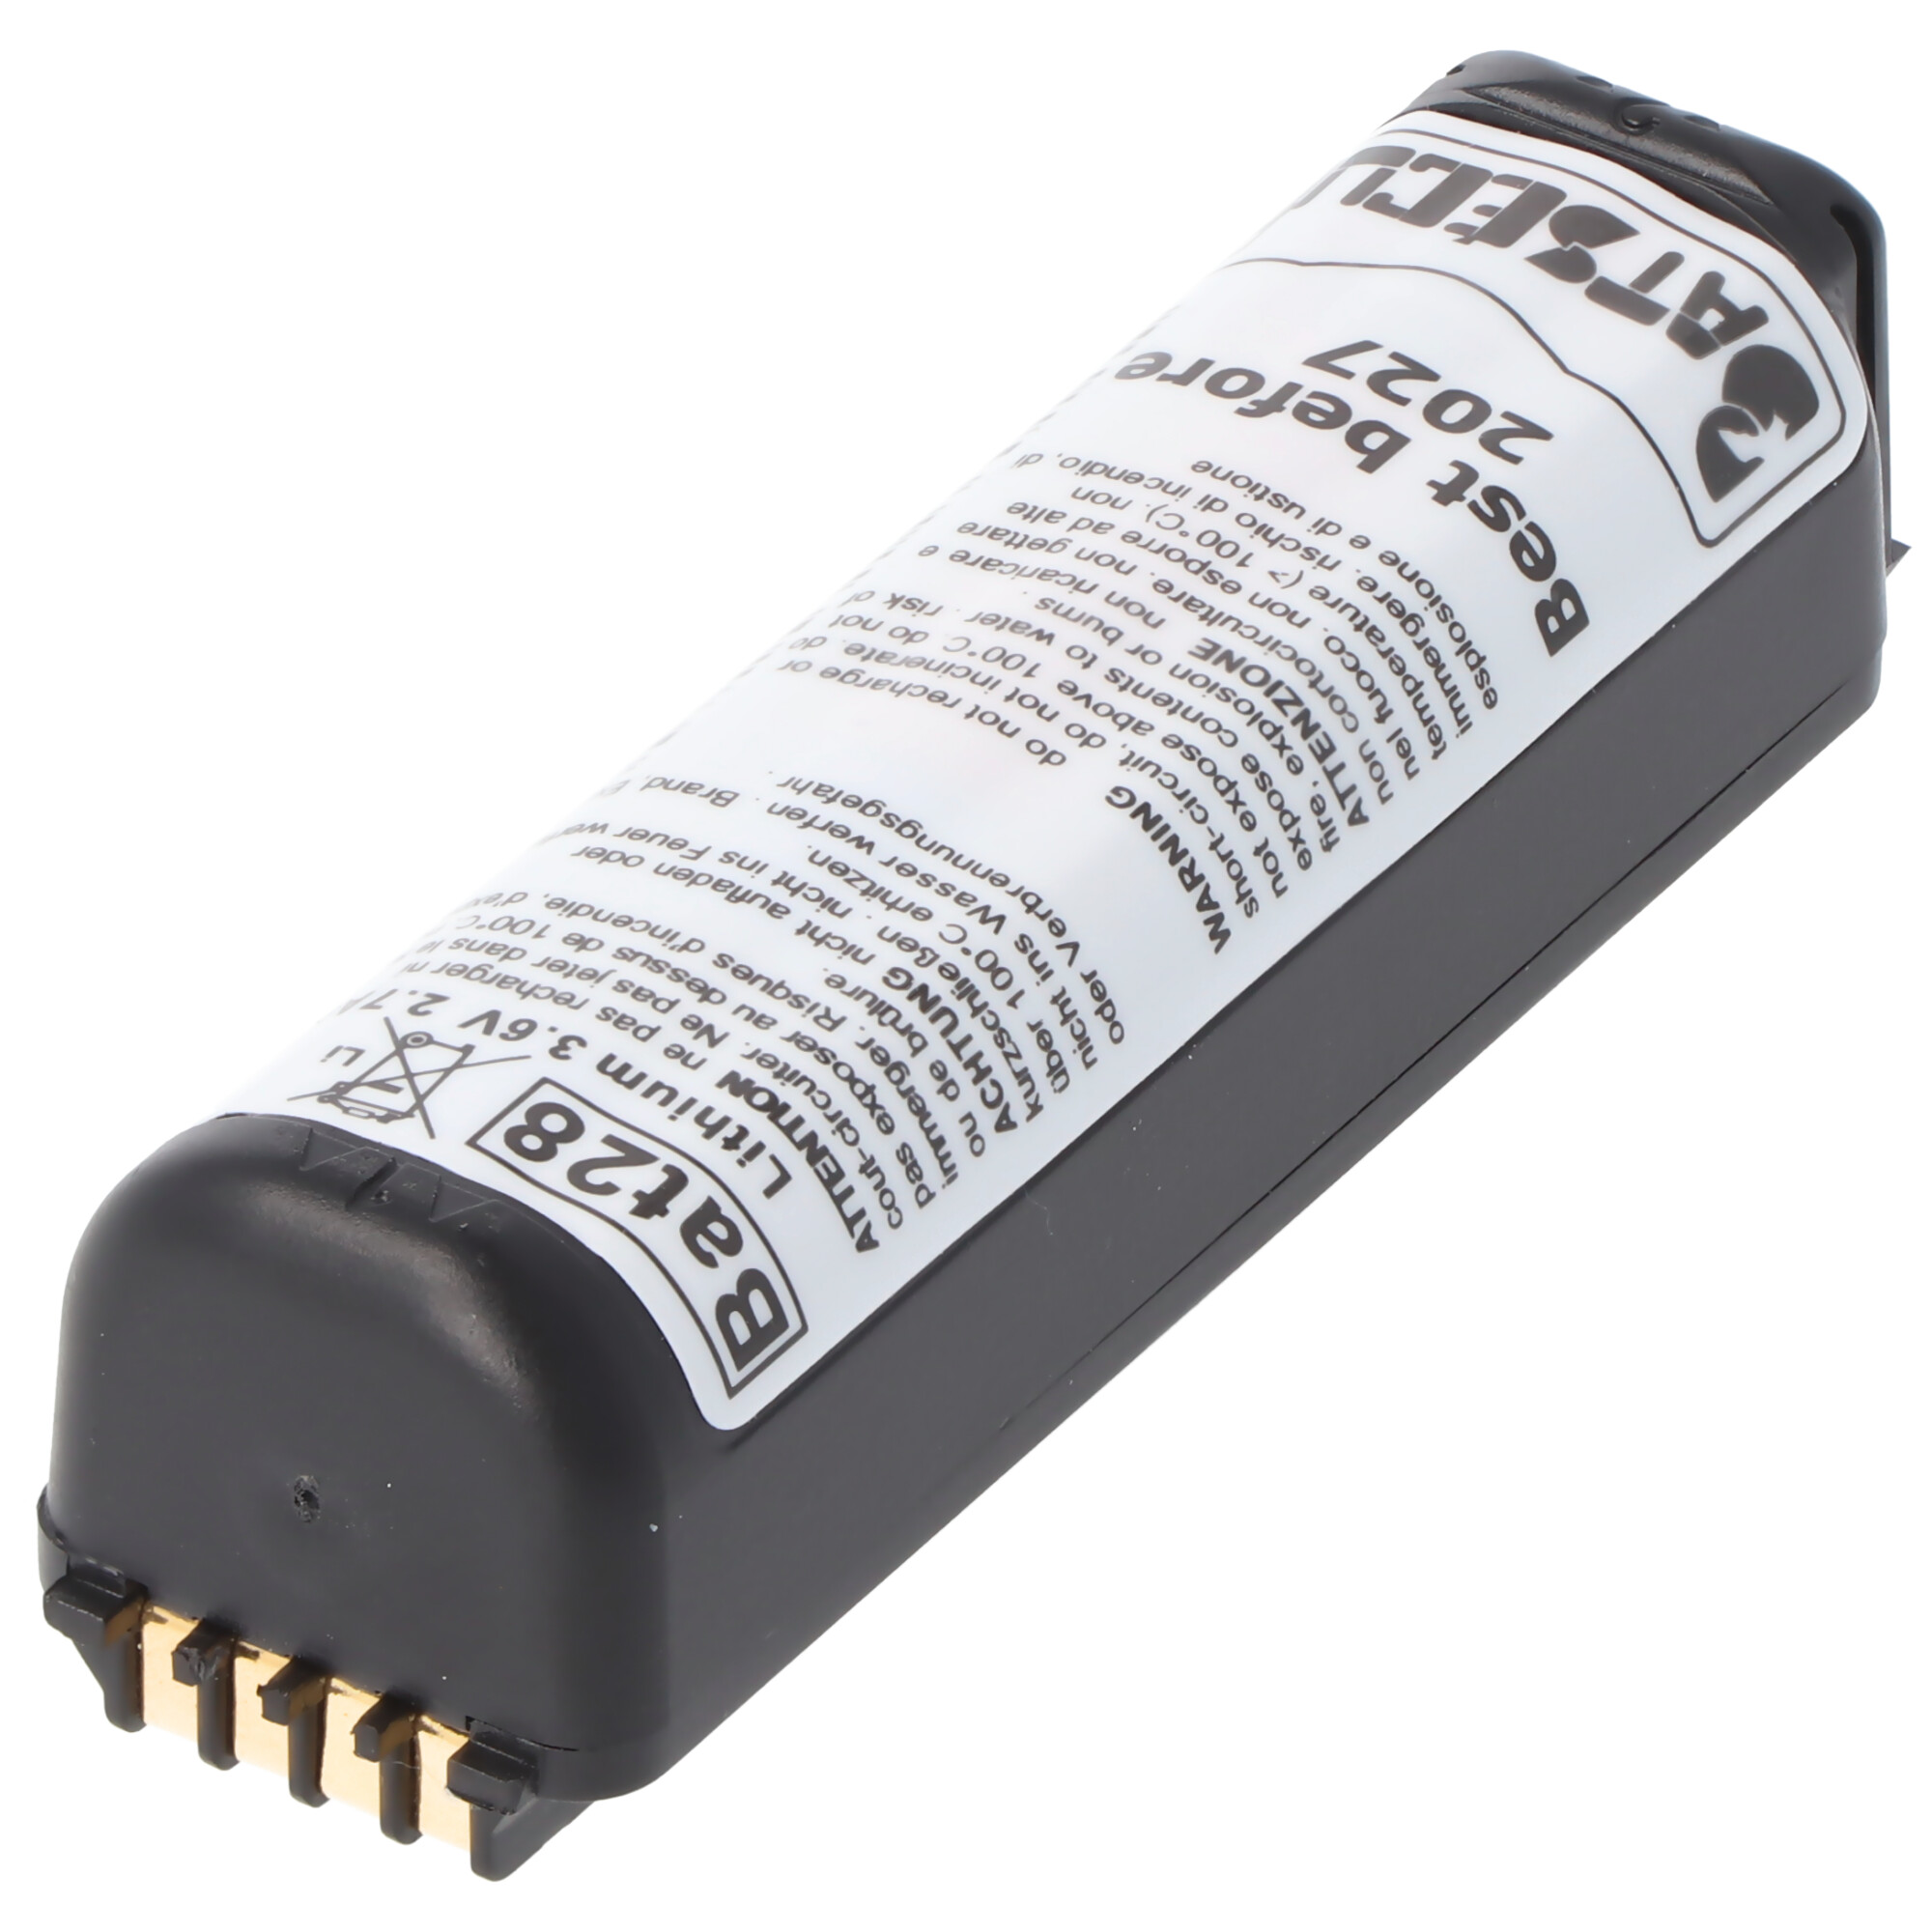 Batterie passend für den DAITEM BATLi28 Lithium battery 3,6 Volt 2000mAh